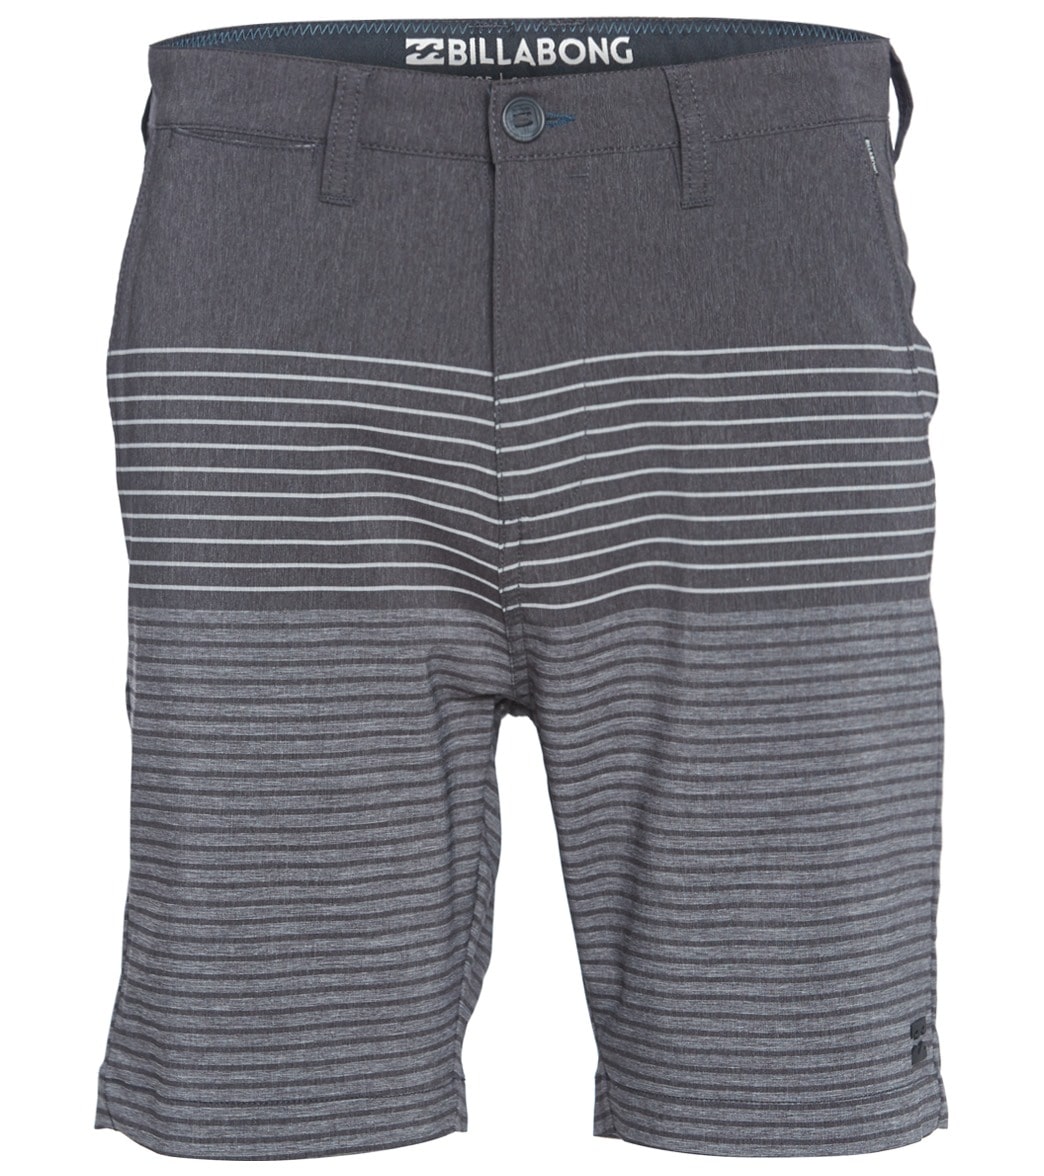 Billabong Crossfire X Stripe Shorts - Charcoal 28 - Swimoutlet.com